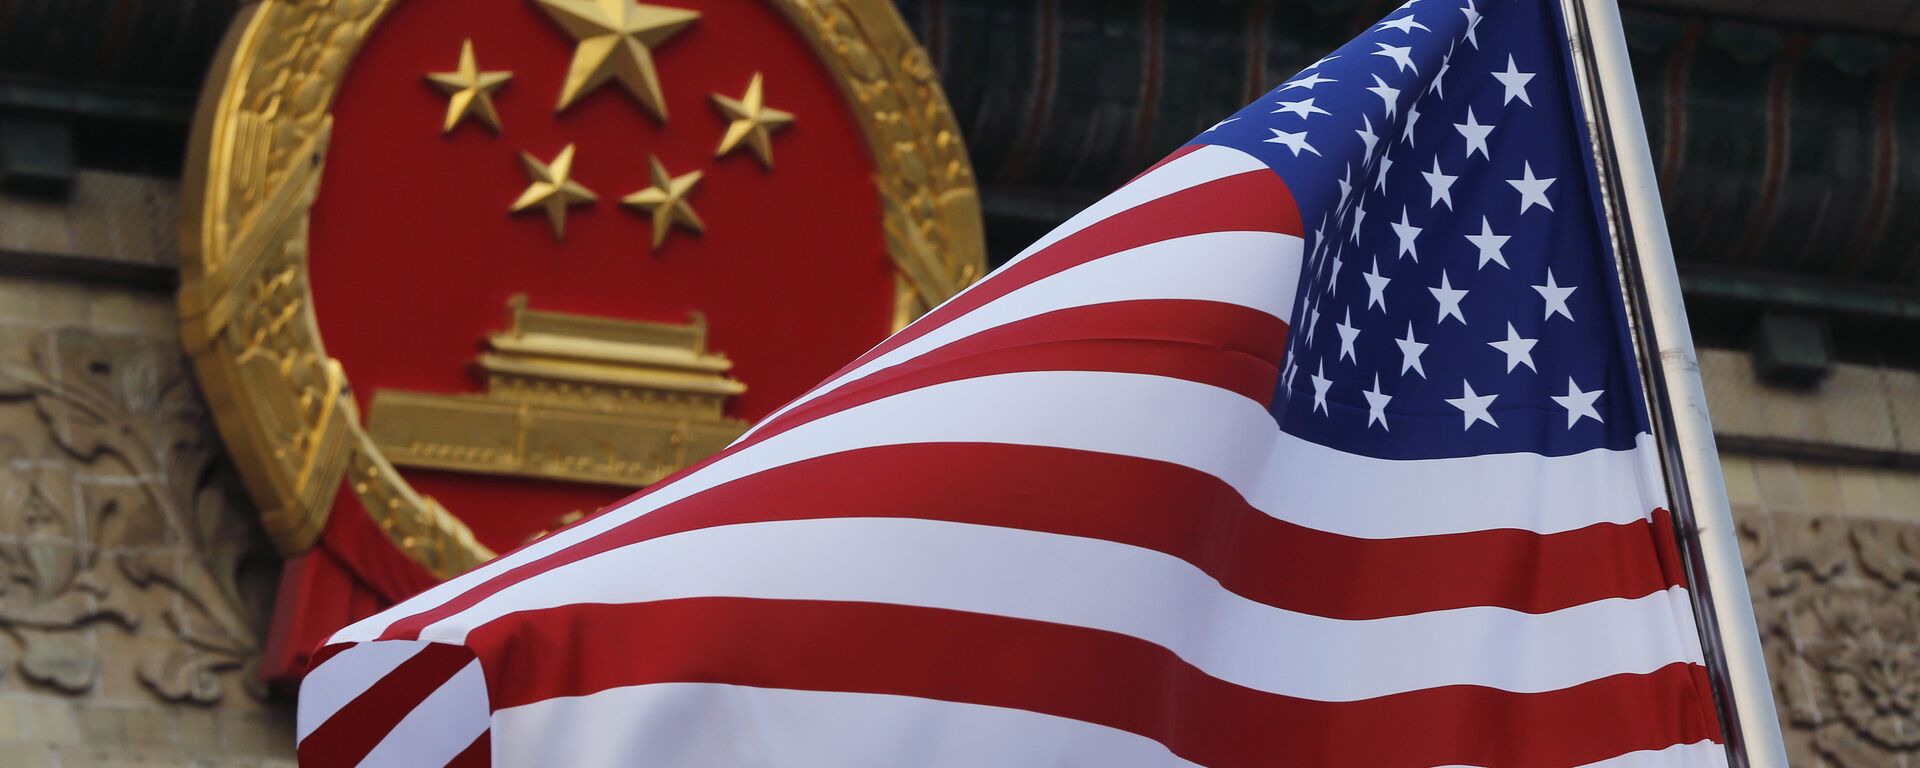 La bandera de EEUU y el emblema de China  - Sputnik Mundo, 1920, 02.02.2021